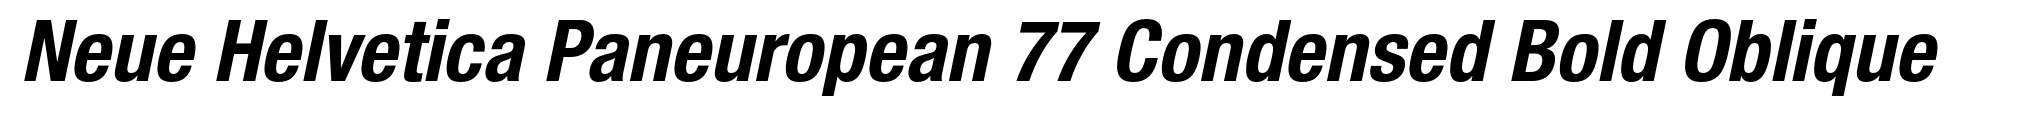 Neue Helvetica Paneuropean 77 Condensed Bold Oblique image